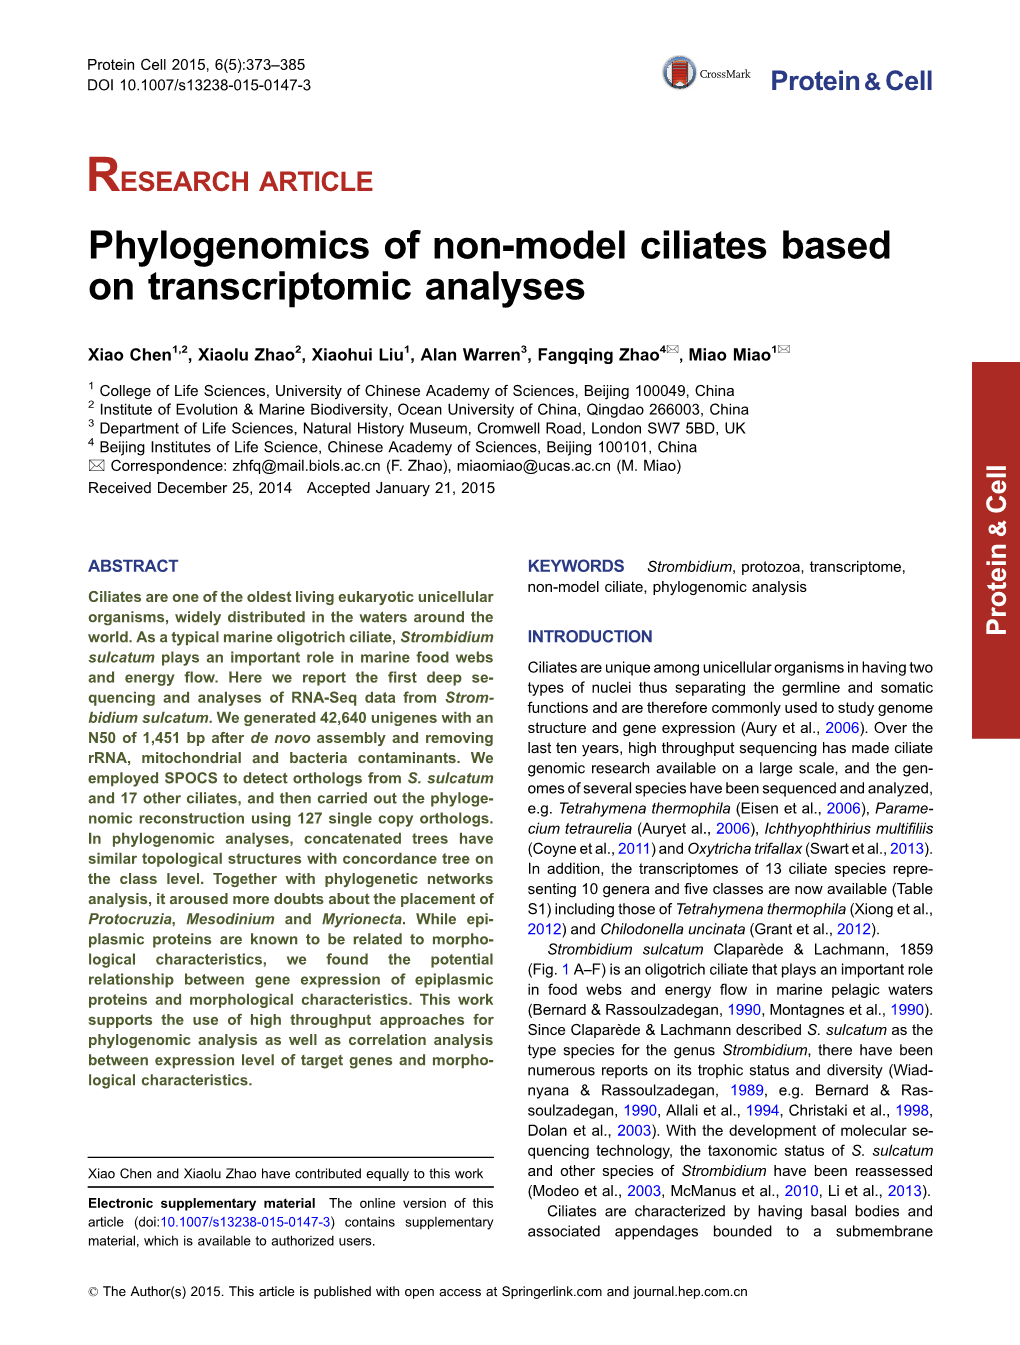 Phylogenomics of Non-Model Ciliates Based on Transcriptomic Analyses